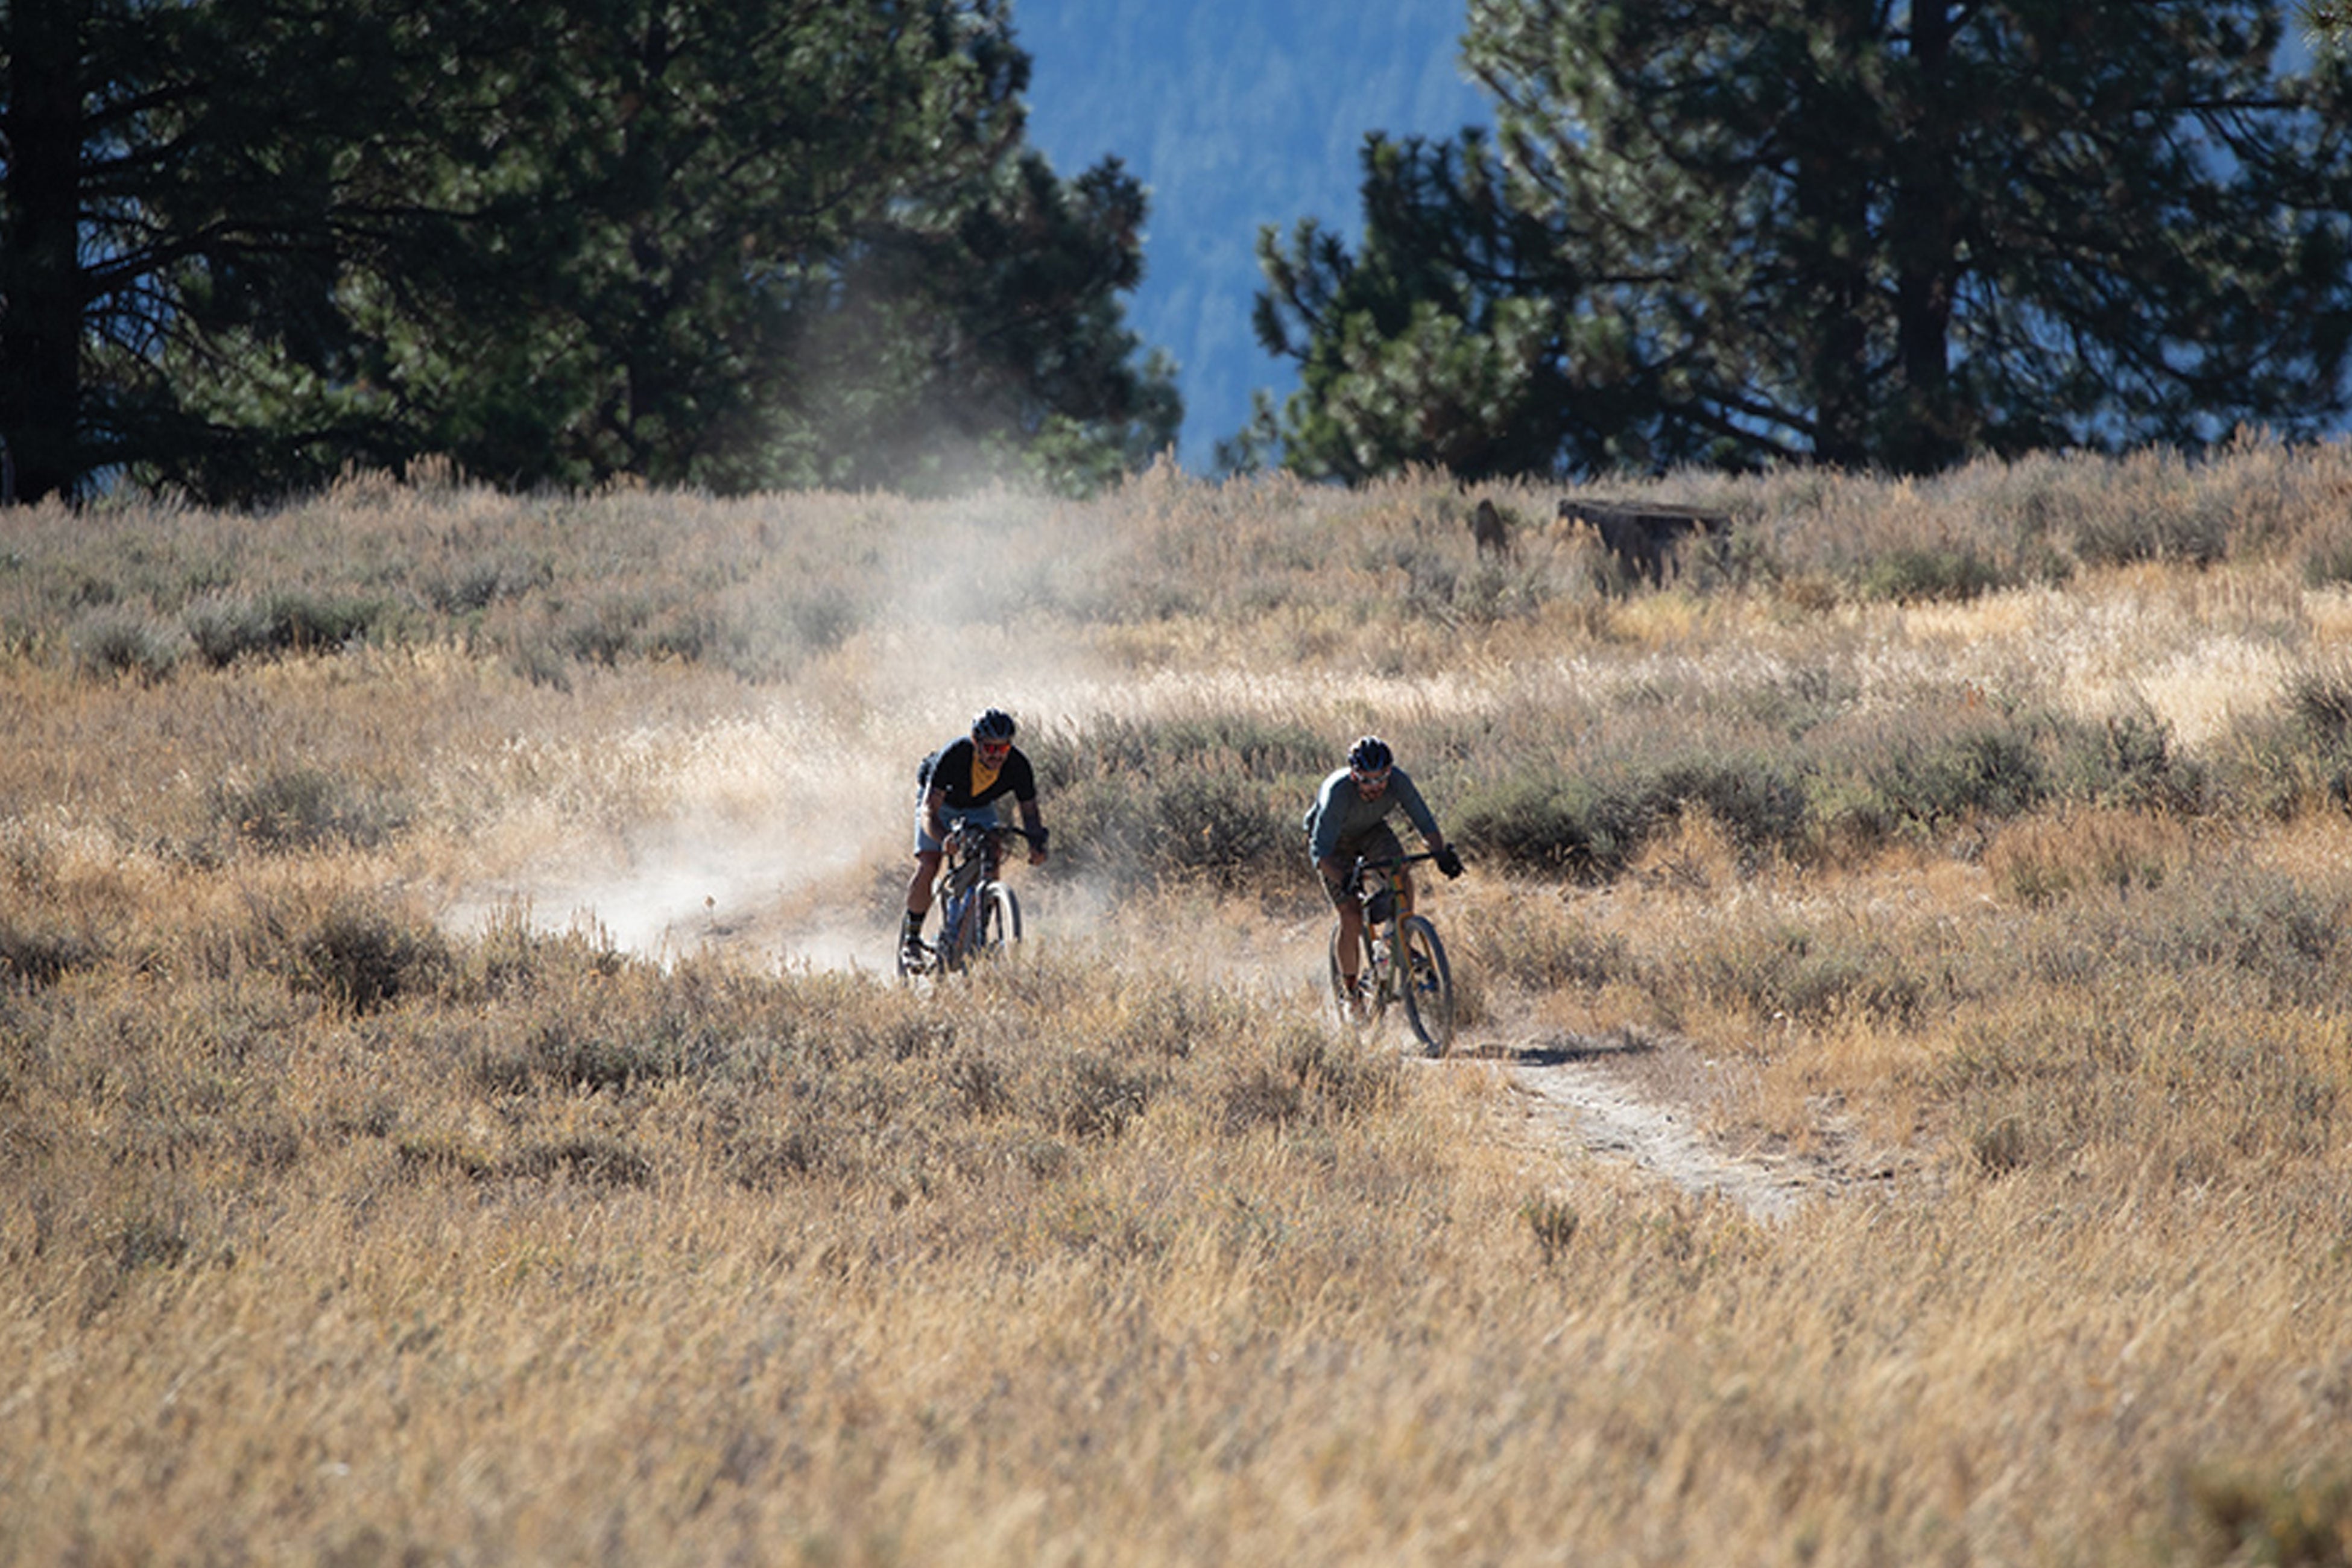 Yuri Hauswald gravel biking in the Sierra Nevada mountains